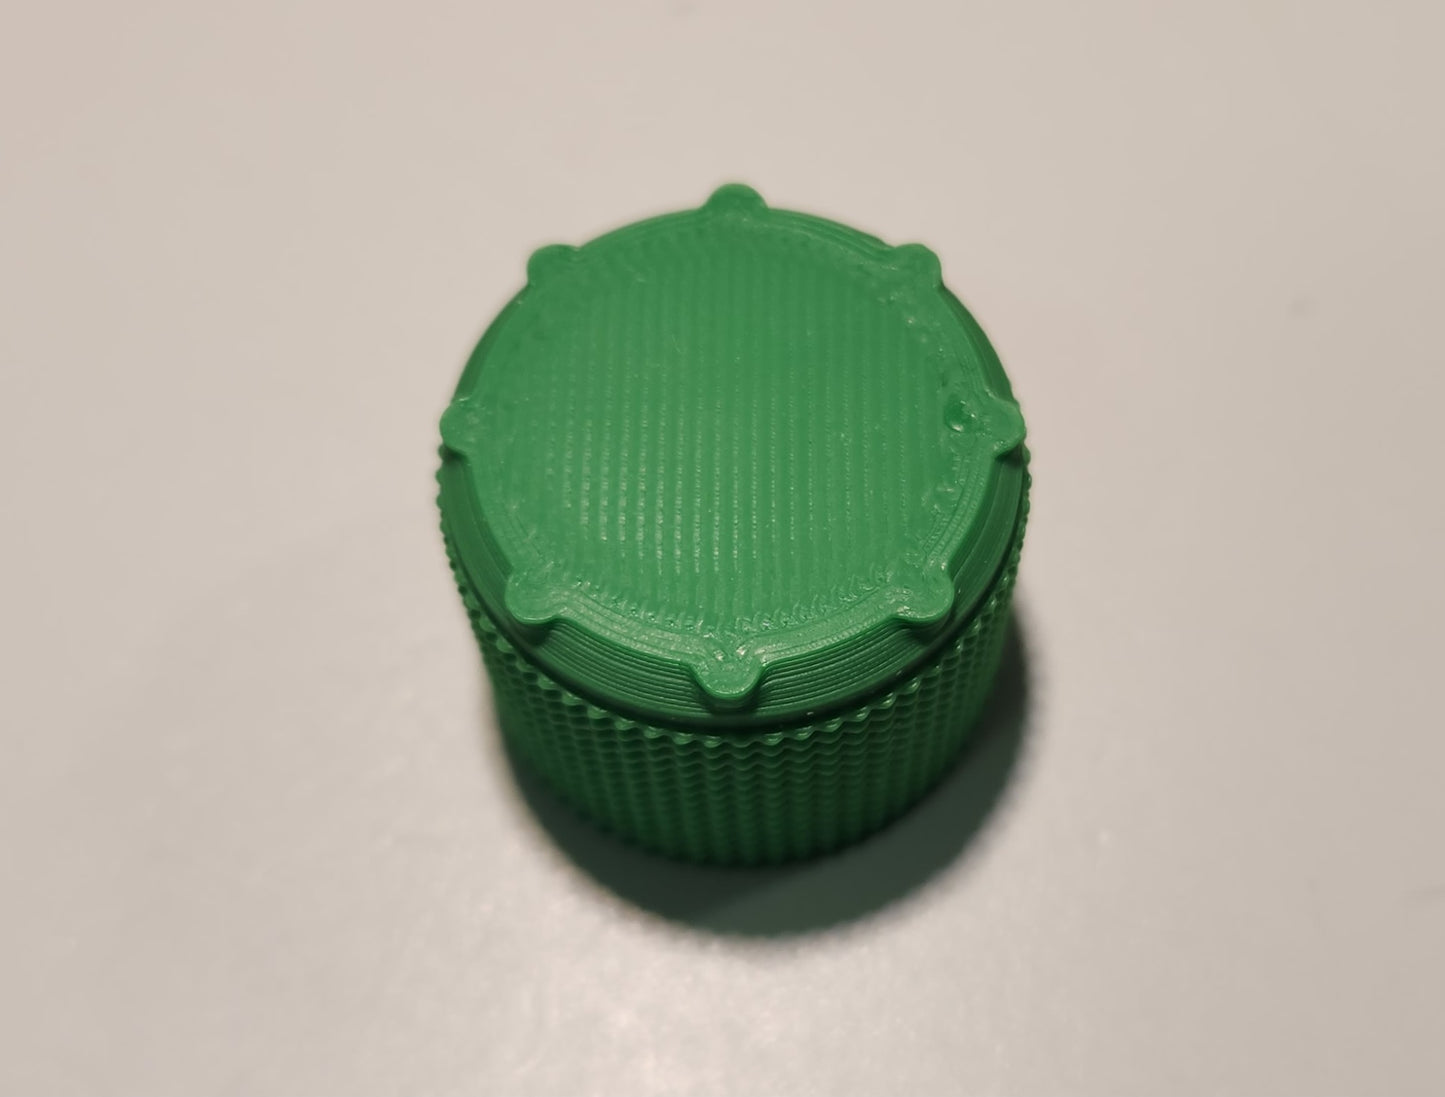 Emisar DW4 Bezel Removal Tool 3D Printed GREEN